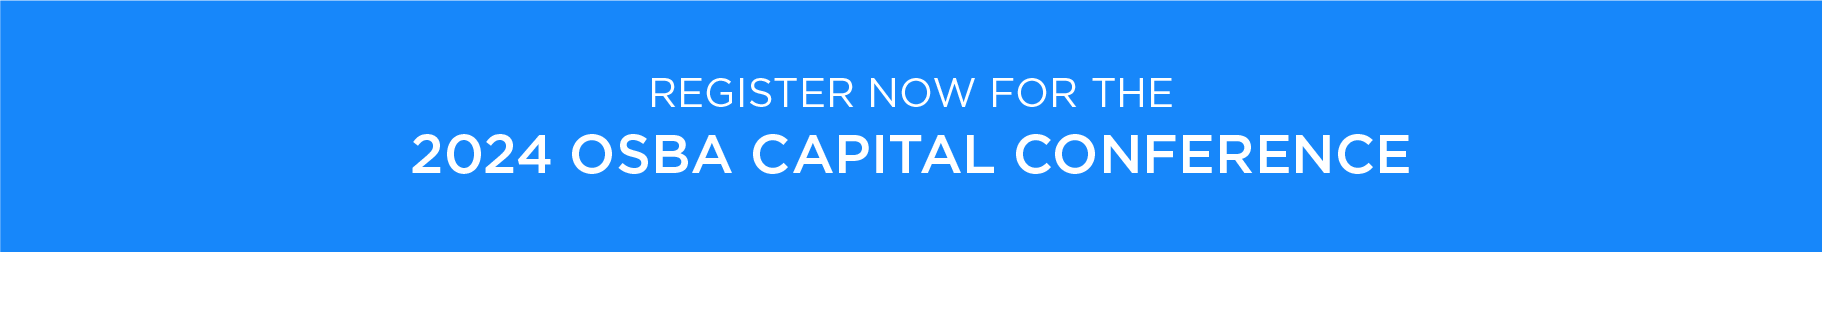 Capital Conference Registration